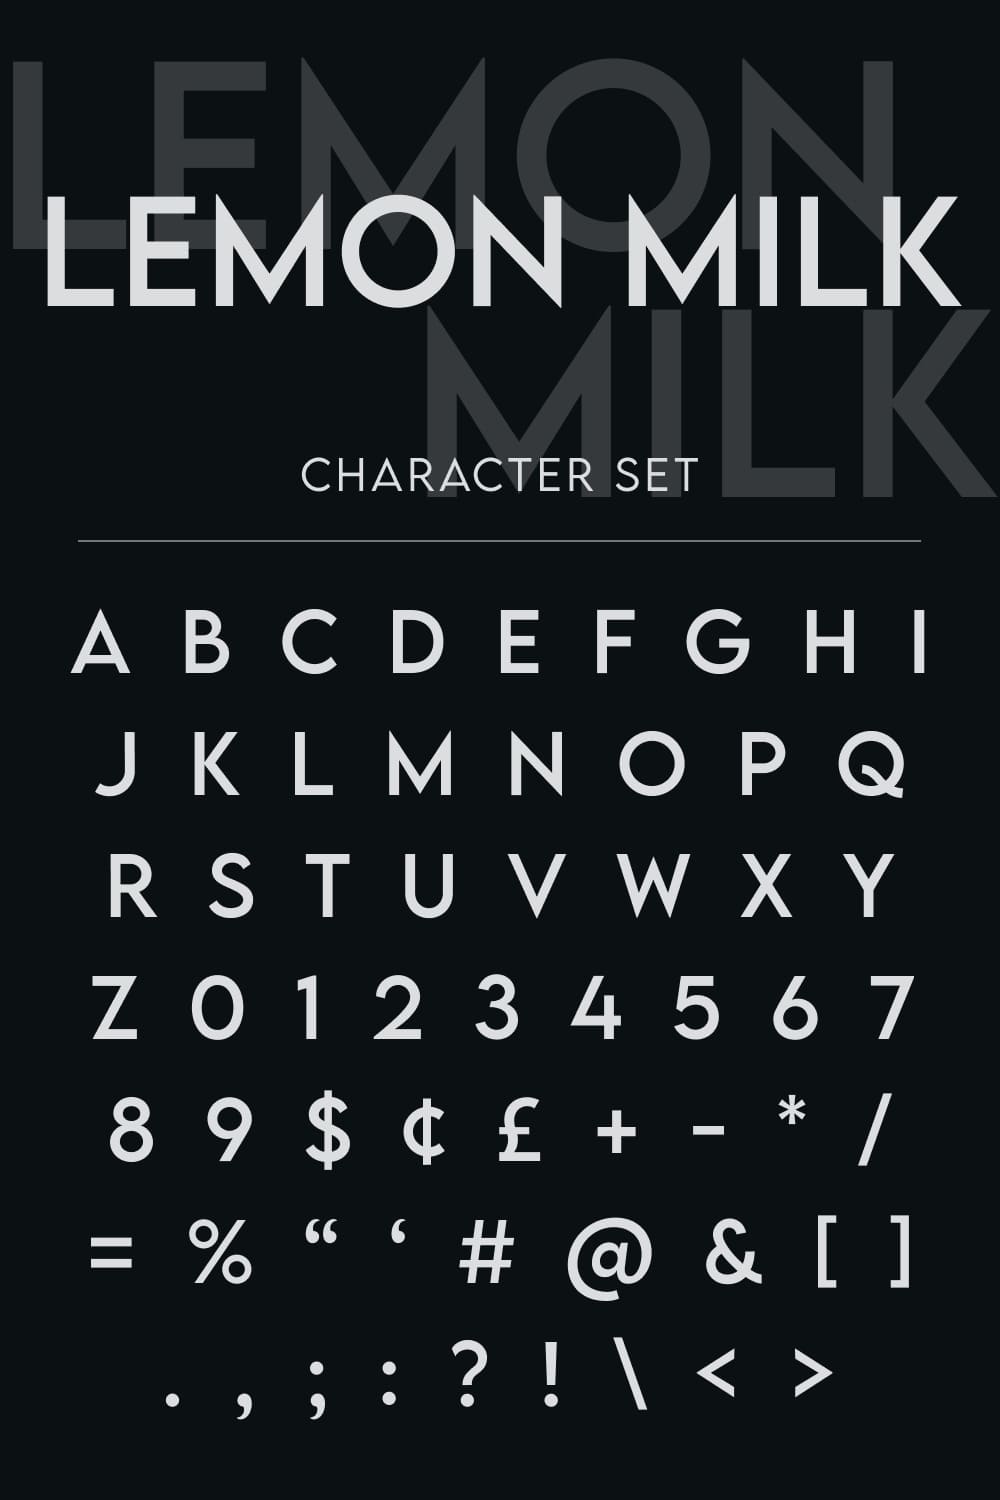 Character set of lemon milk font.